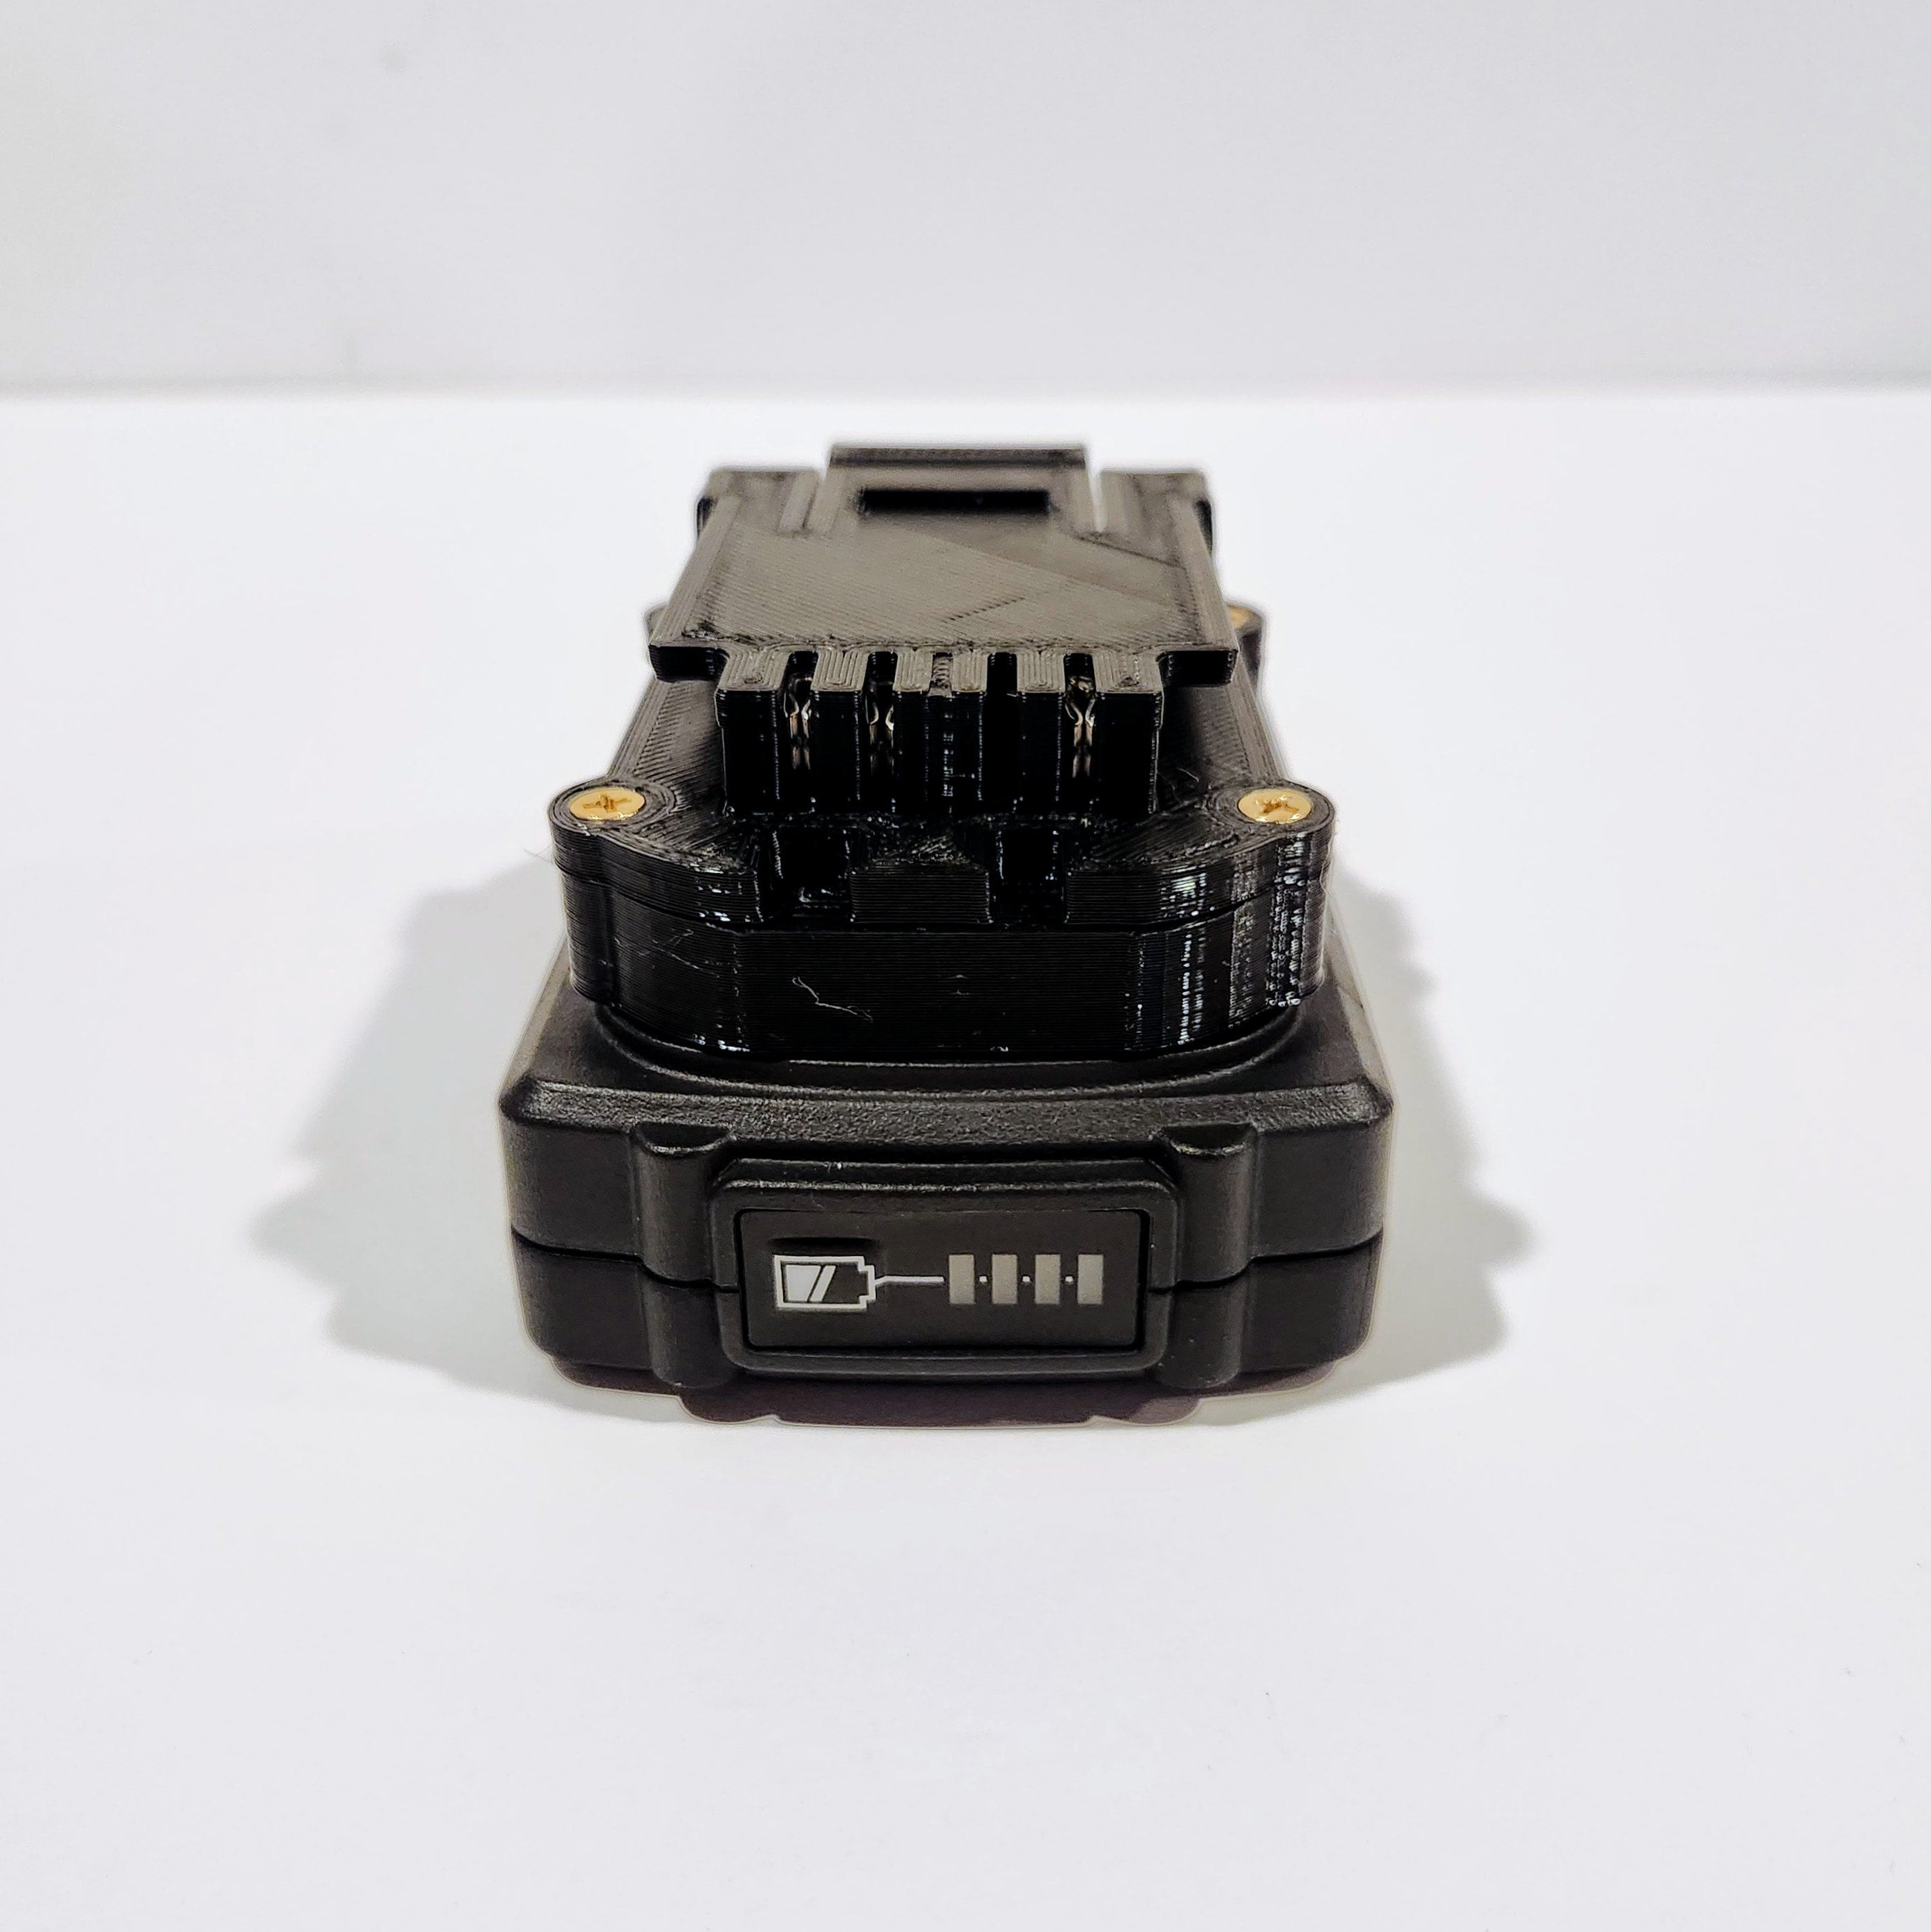 Bauer / Dewalt / Hercules 20v Low Profile Battery Adapter for